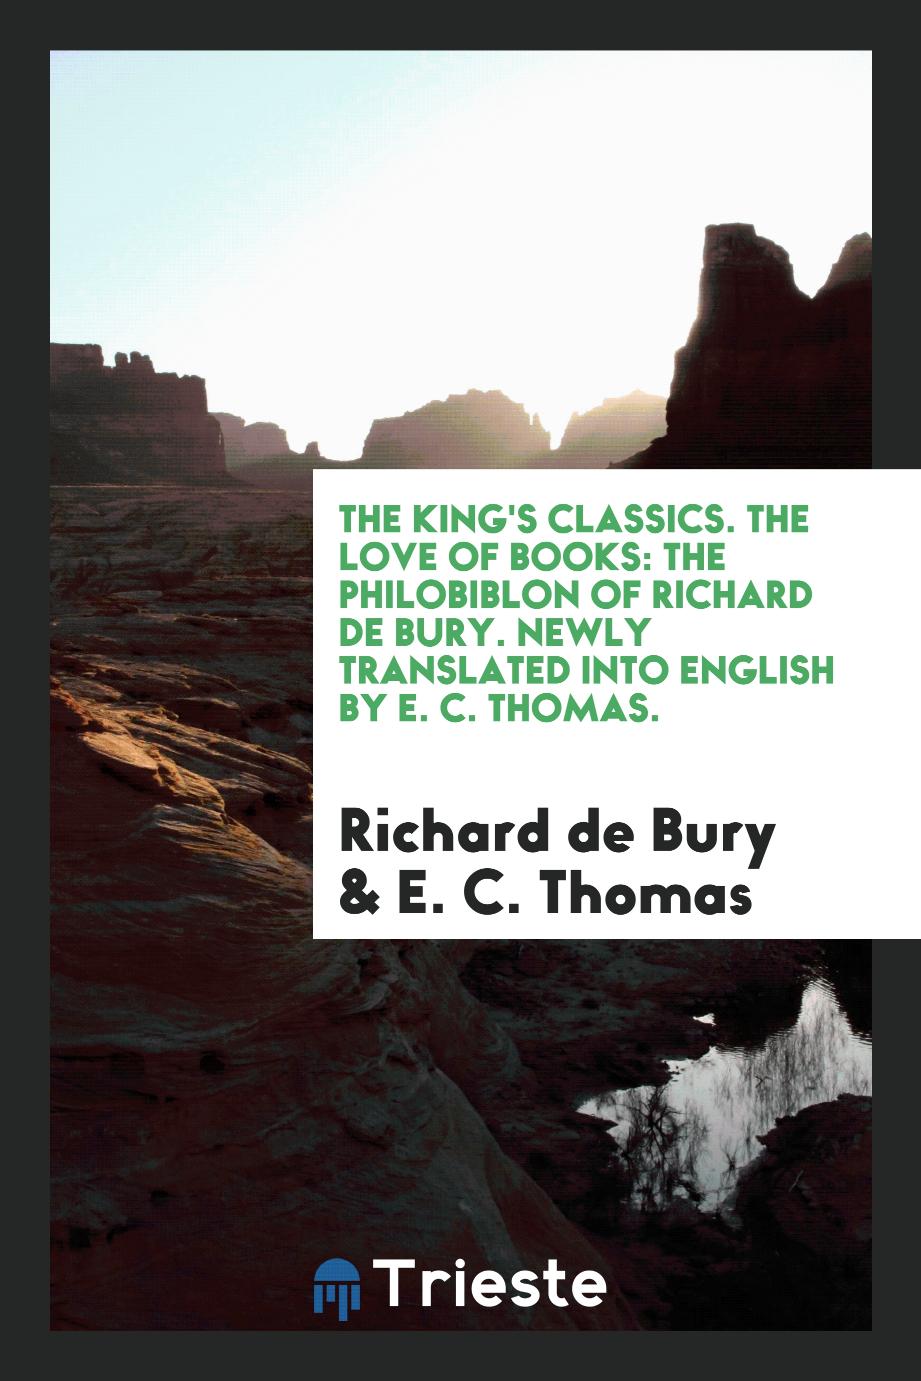 The King's Classics. The Love of Books: The Philobiblon of Richard de Bury. Newly Translated into English by E. C. Thomas.